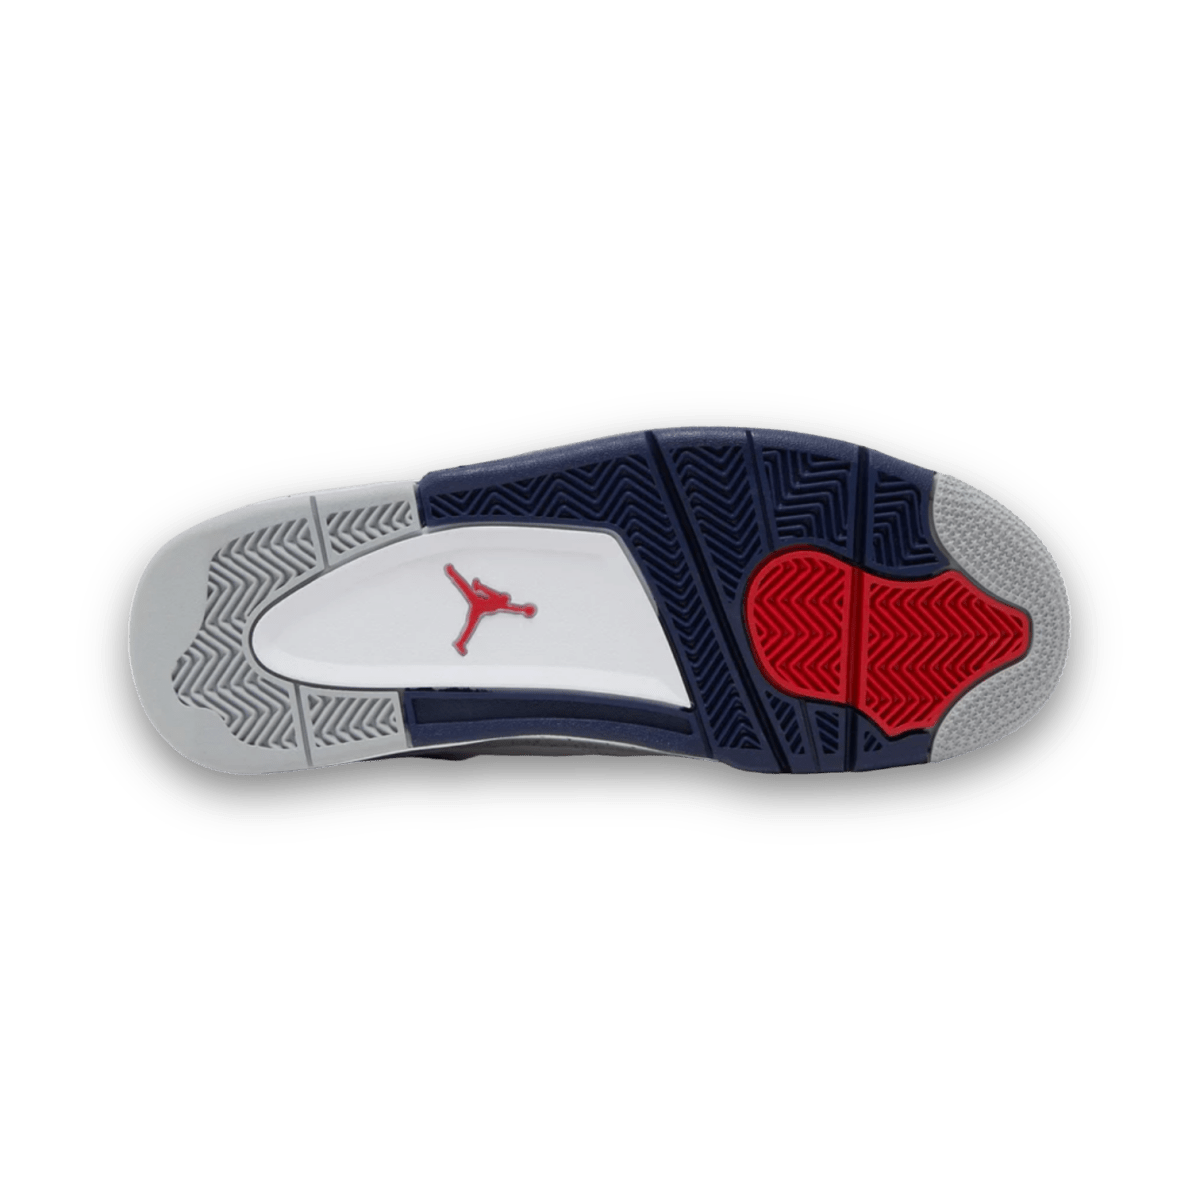 Laces for Lions Air Jordan 4 Retro Midnight Navy - sneaker - Mid Sneaker - Jordan - Jawns on Fire